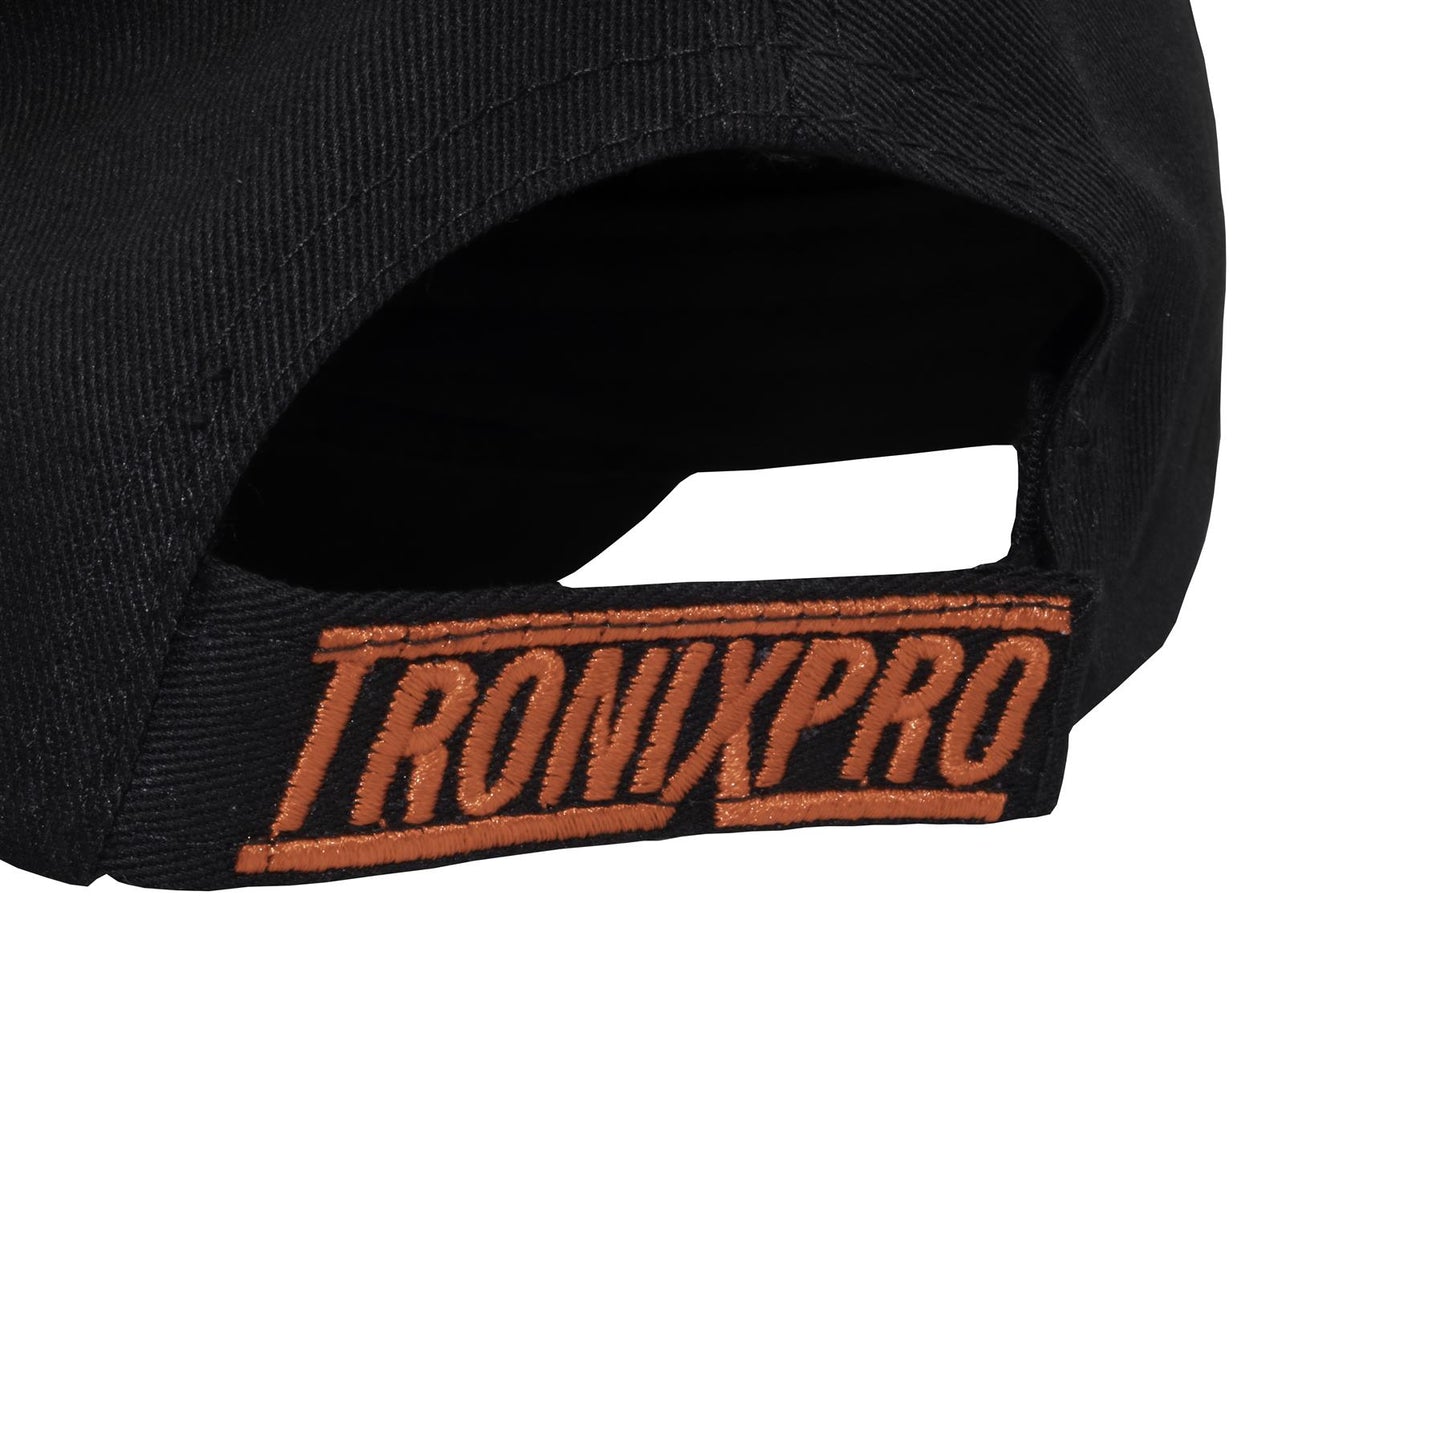 Tronixpro Classic Cap Black/Red